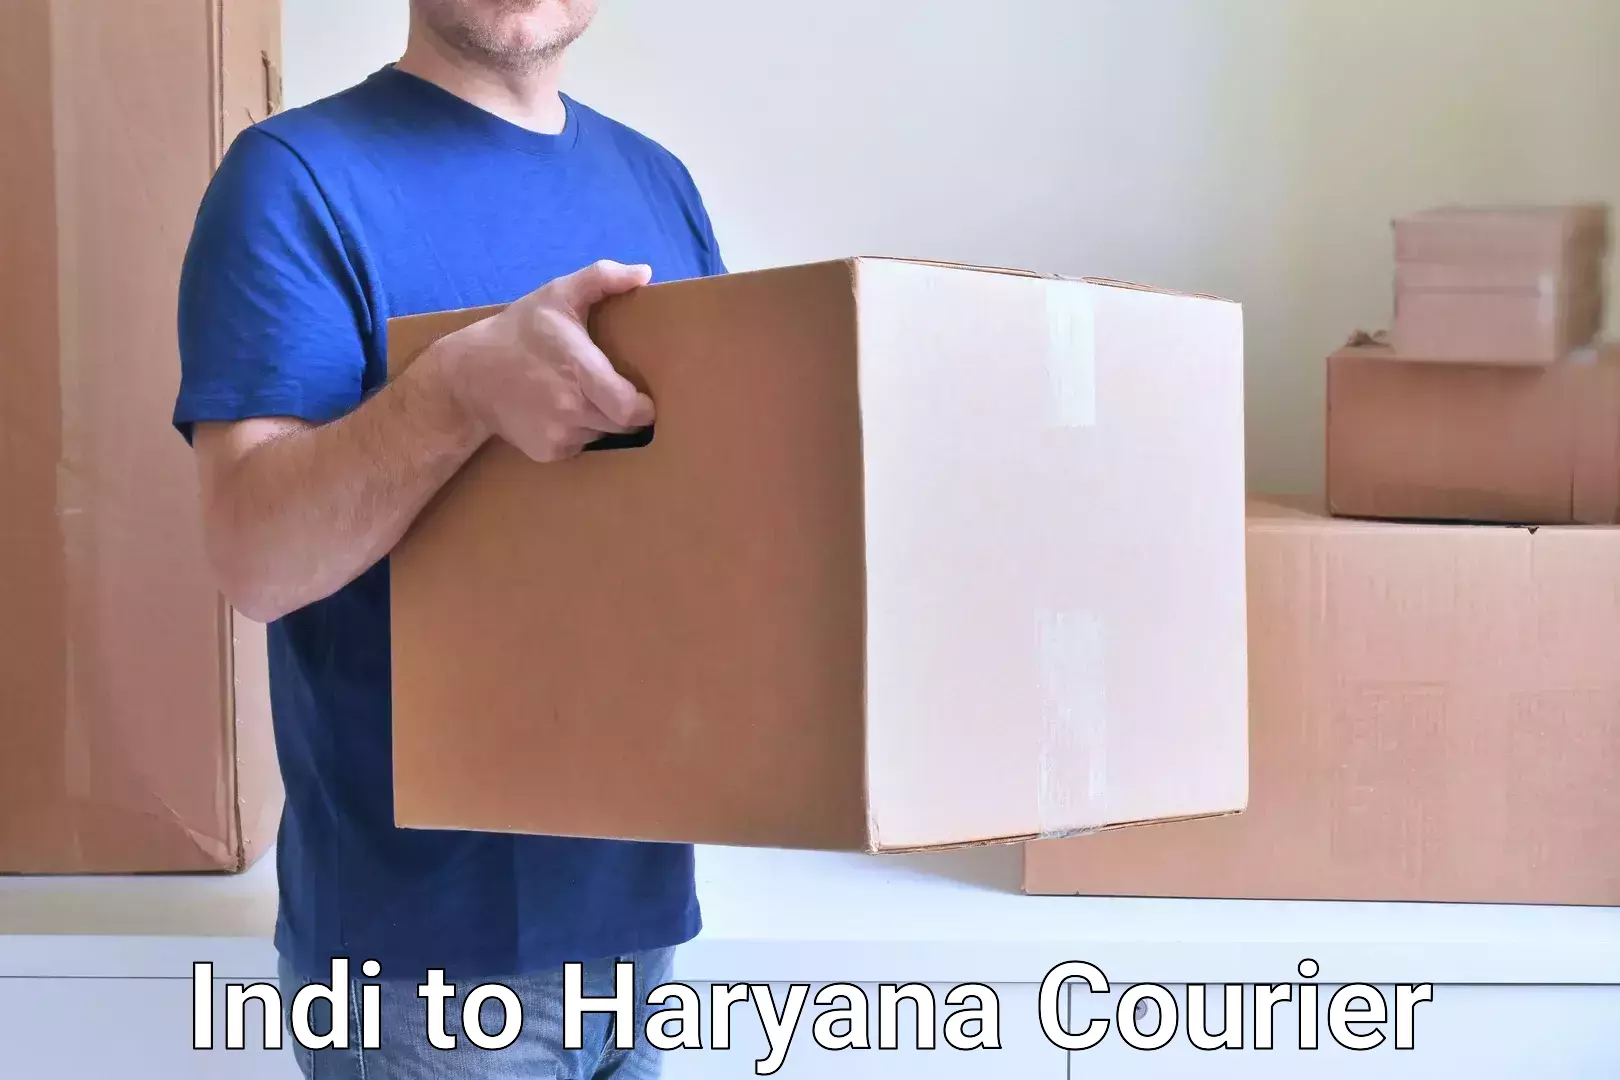 Courier service comparison Indi to Haryana